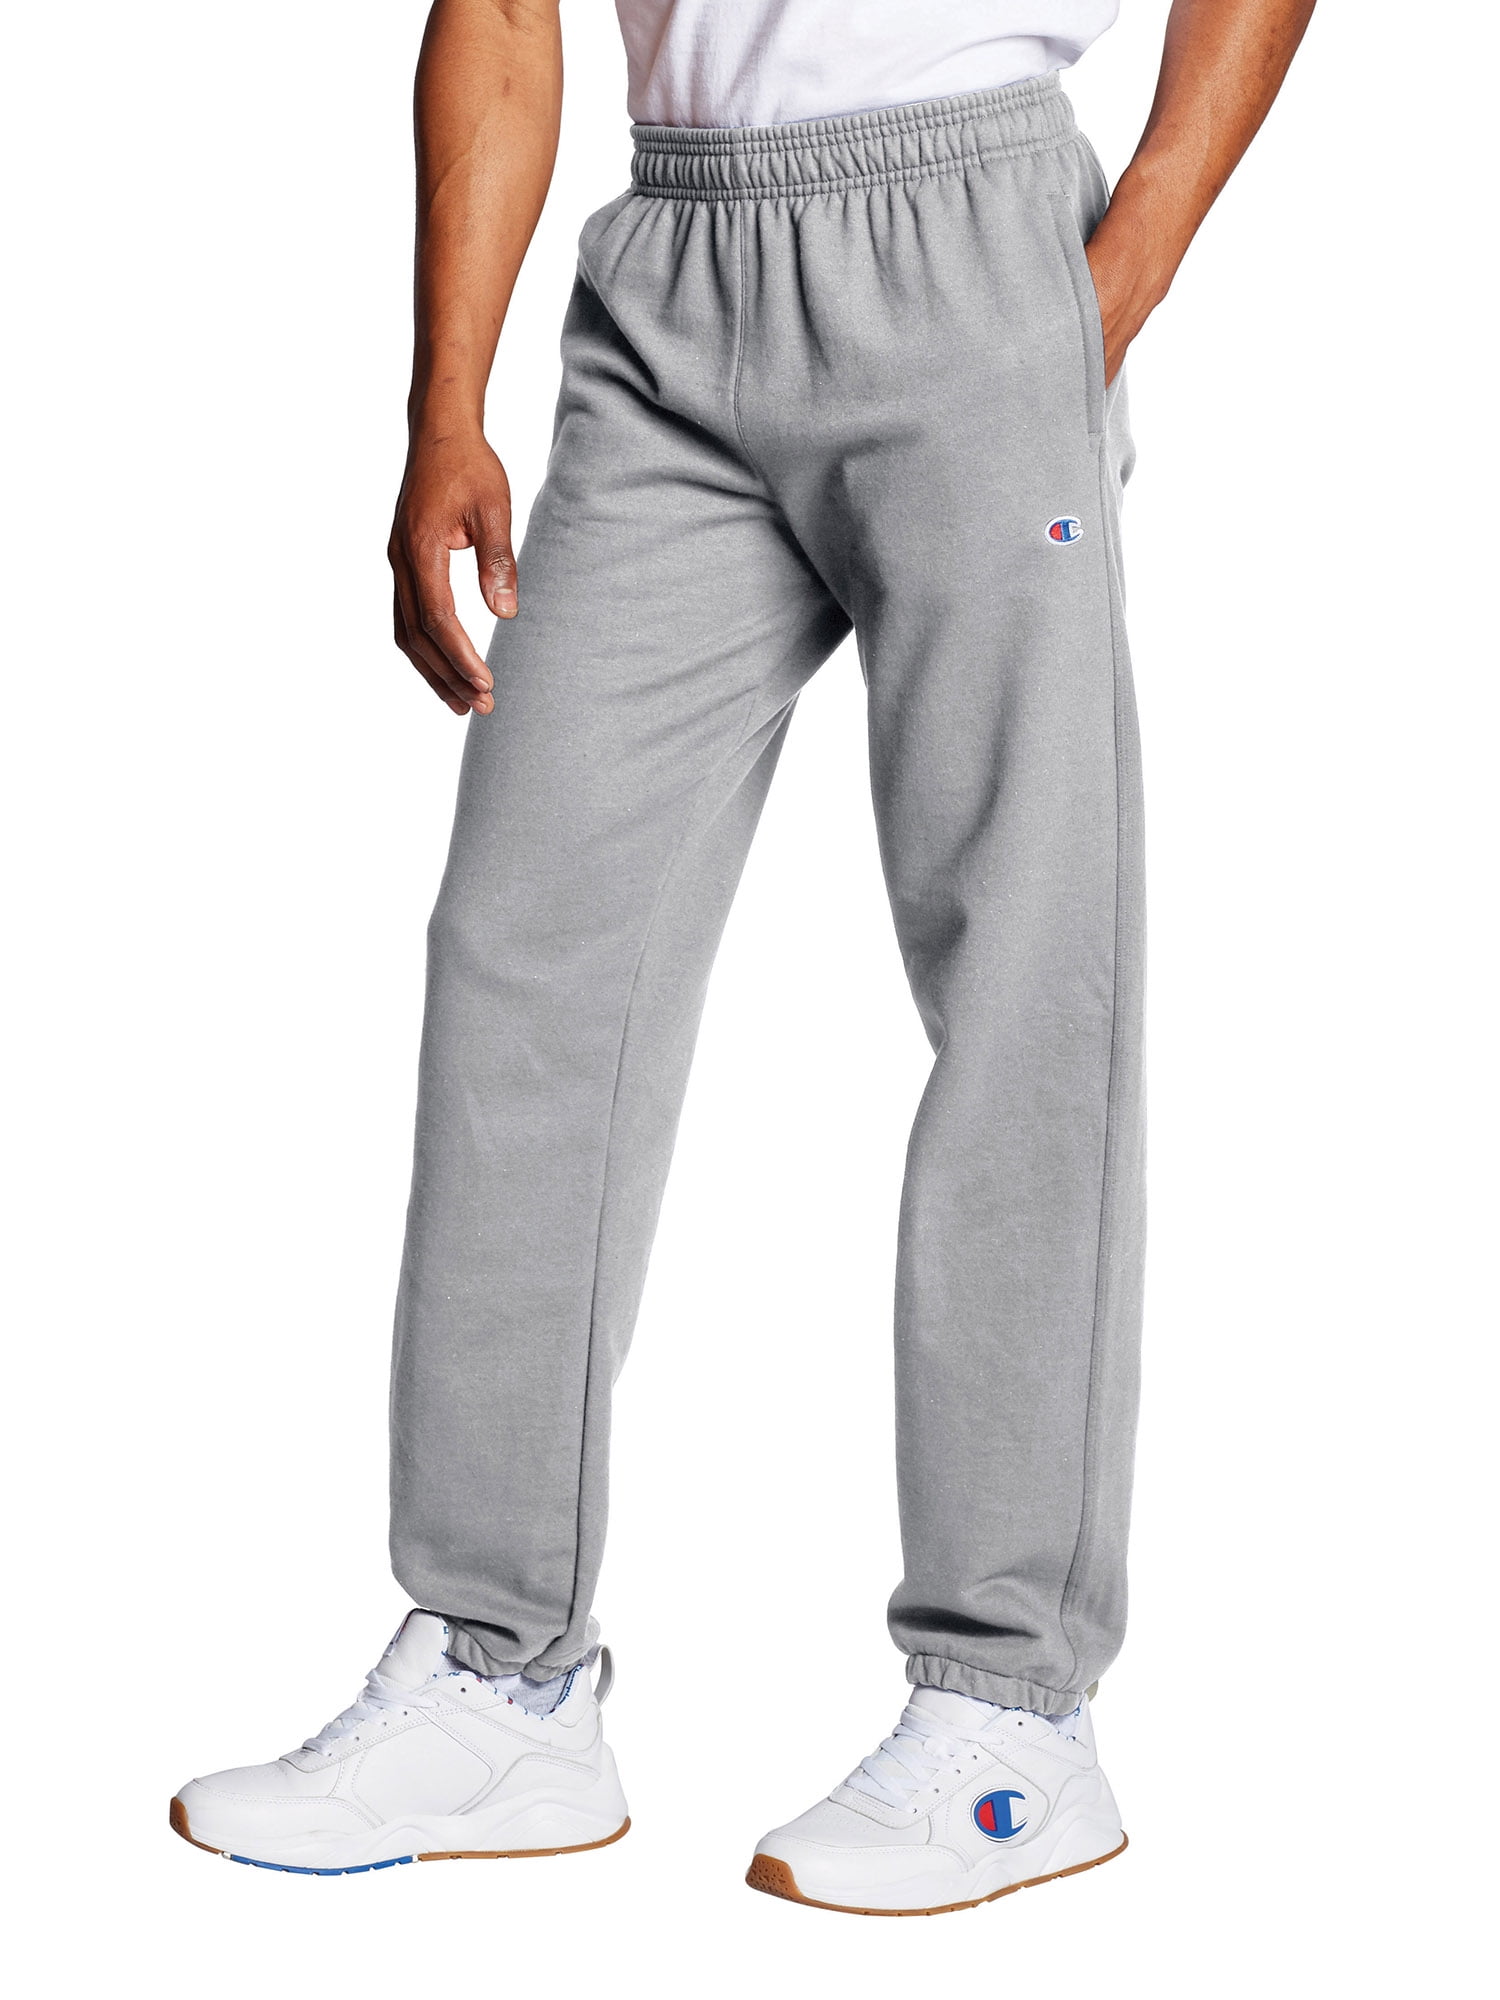  Champion Powerblend Slim, Best Comfortable Sweatpants